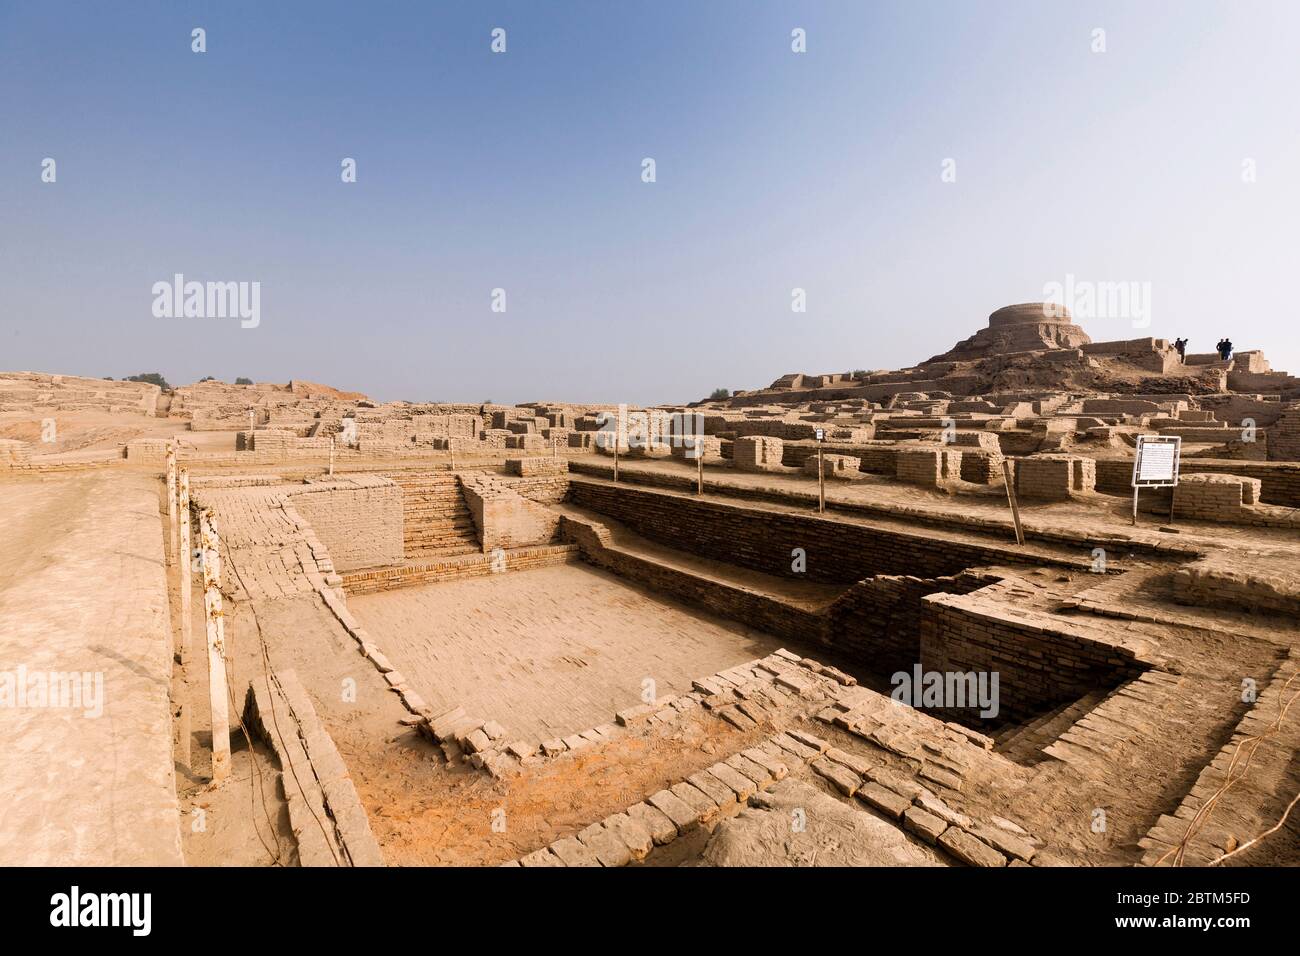 Mohenjo daro, Buddhist stupa and Great Bath, Indus Valley Civilisation, 2500 BCE, Larkana District, Sindh Province, Pakistan, South Asia, Asia Stock Photo